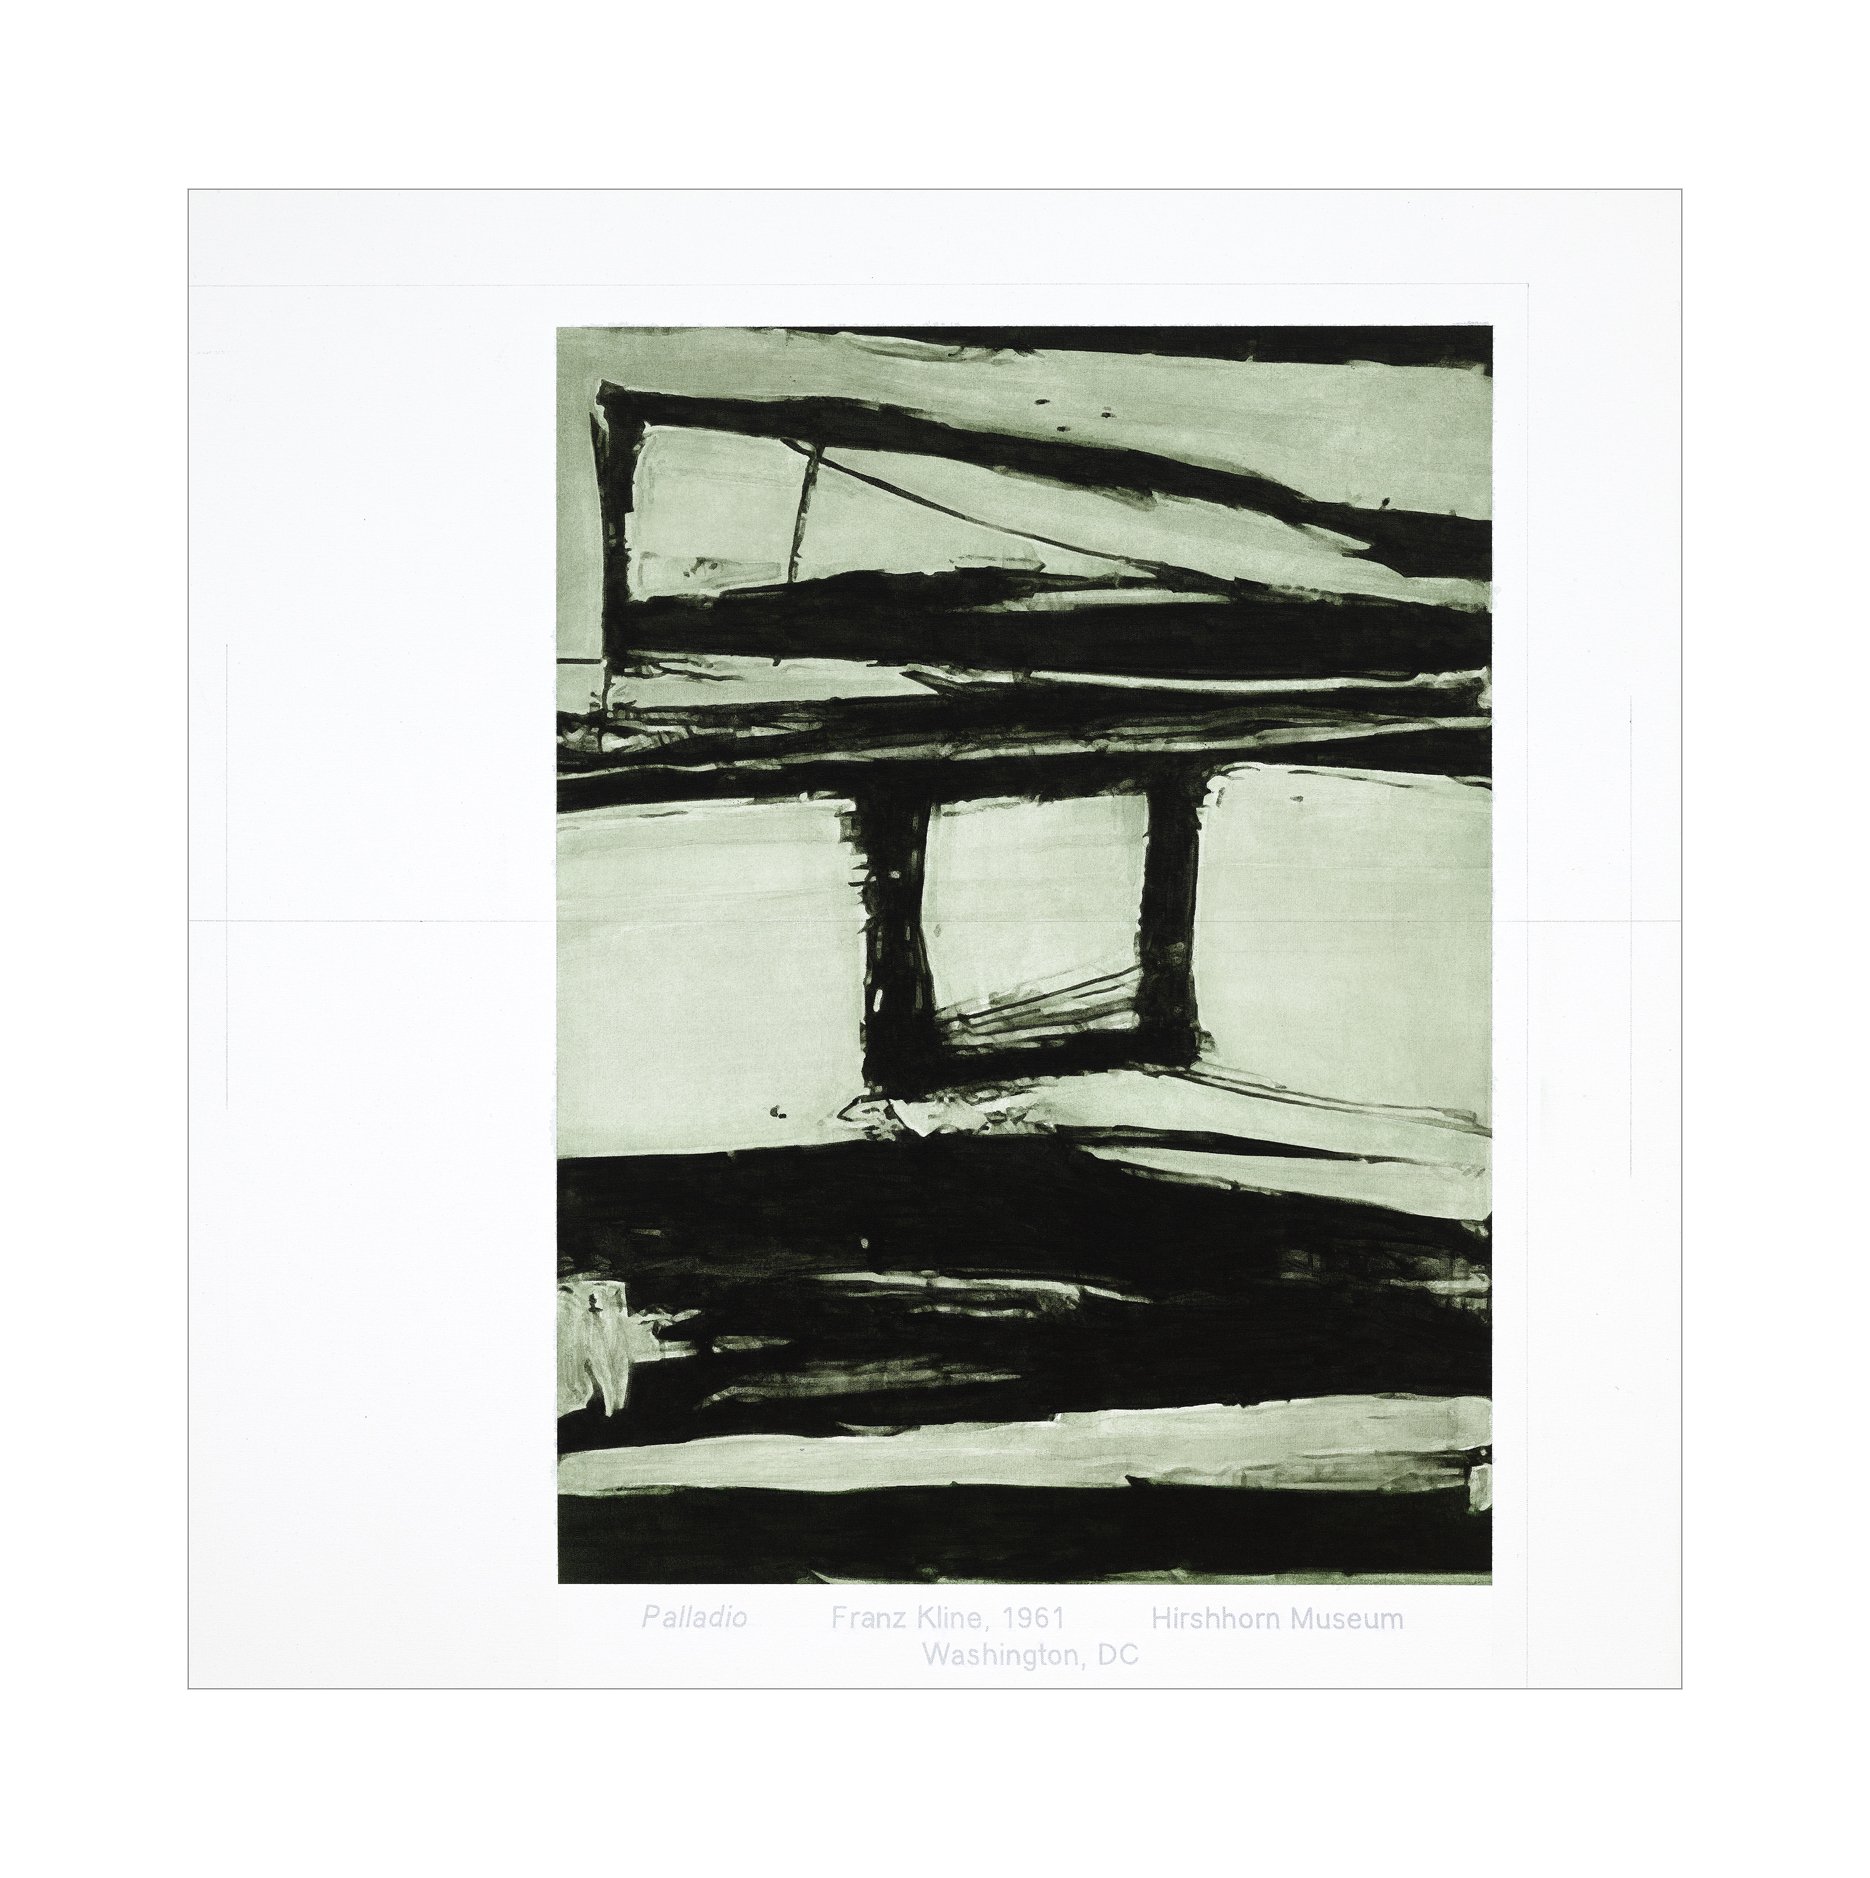   untitled, green / after Franz Kline, Palladio ,  1961   45 x 45, acrylic on canvas, 2020 